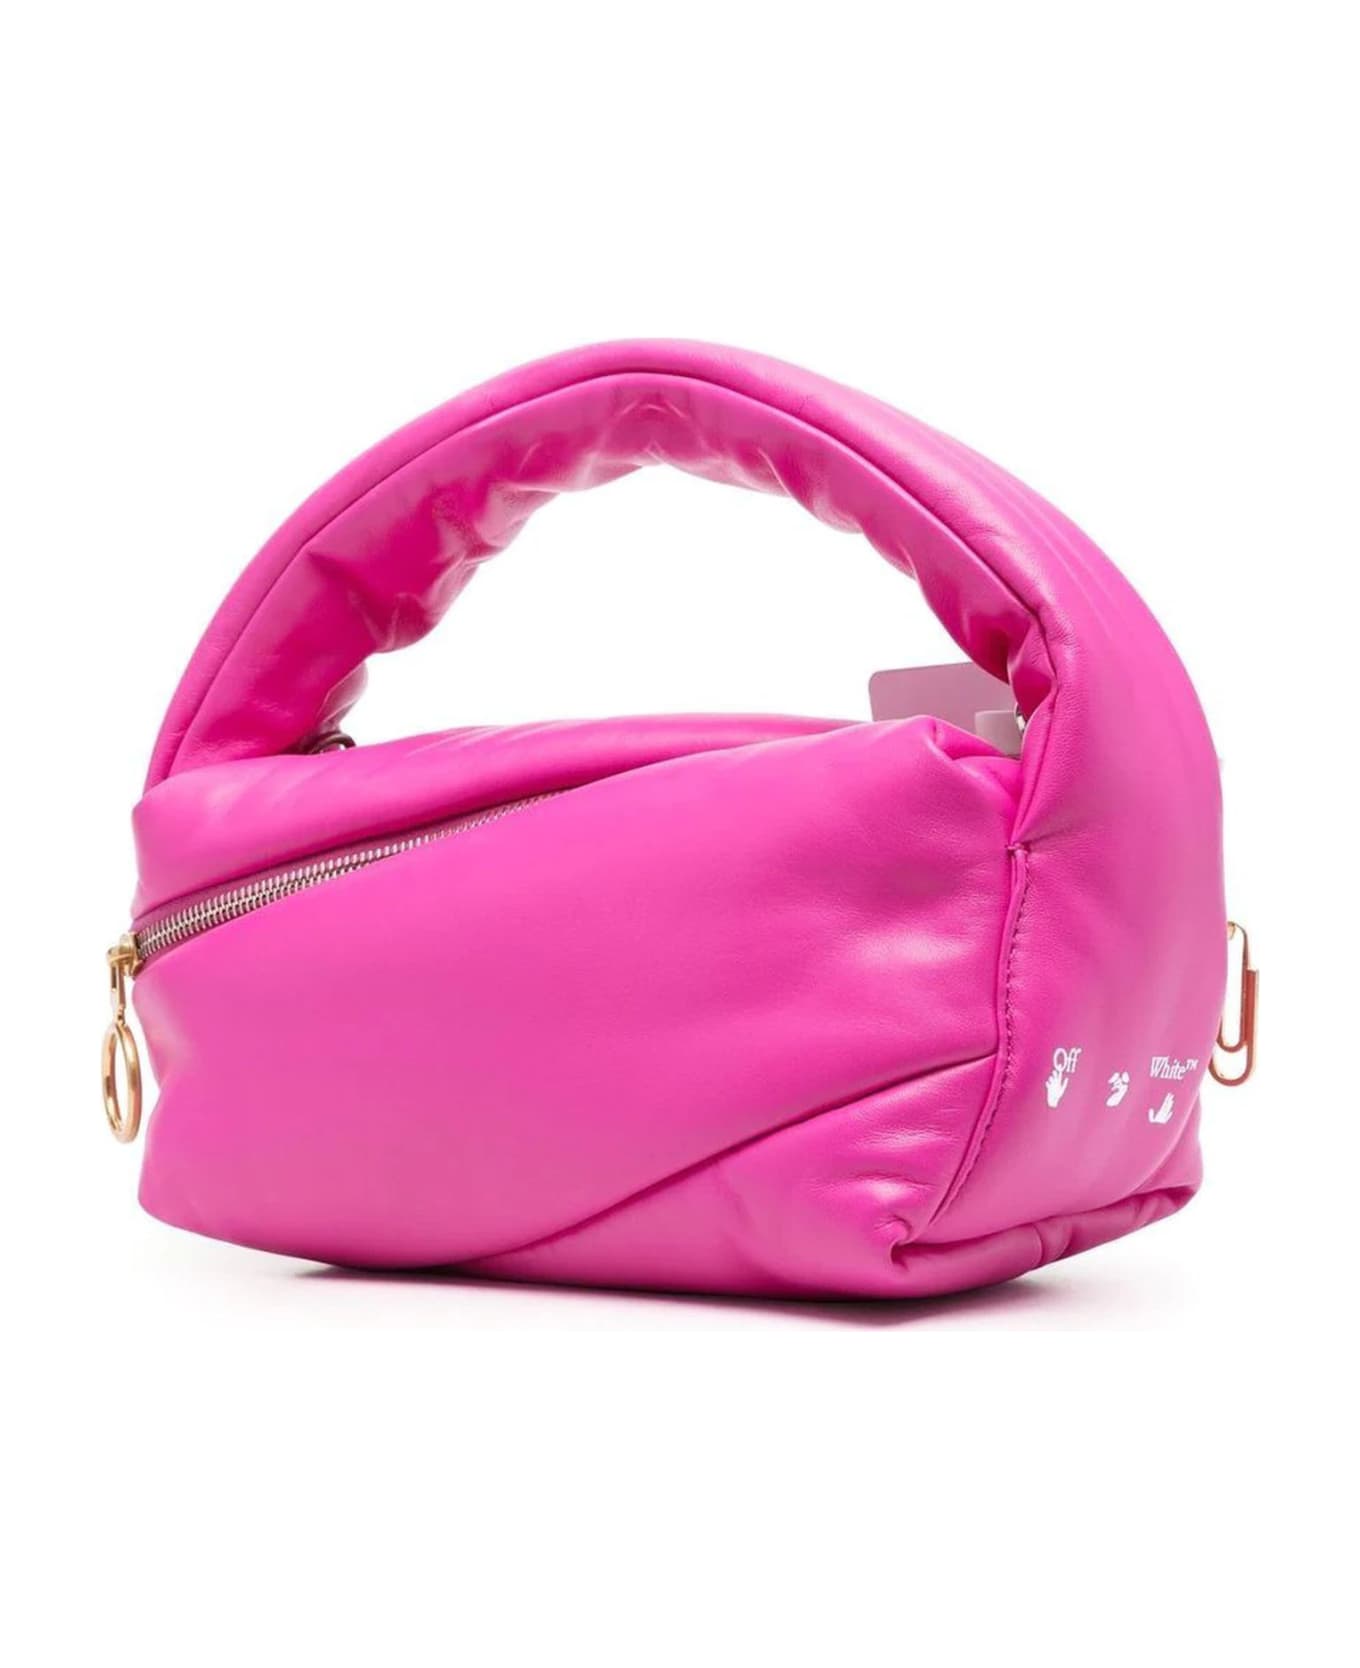 Off-White Pink Leather Pump 24 Handbag - Fuxia